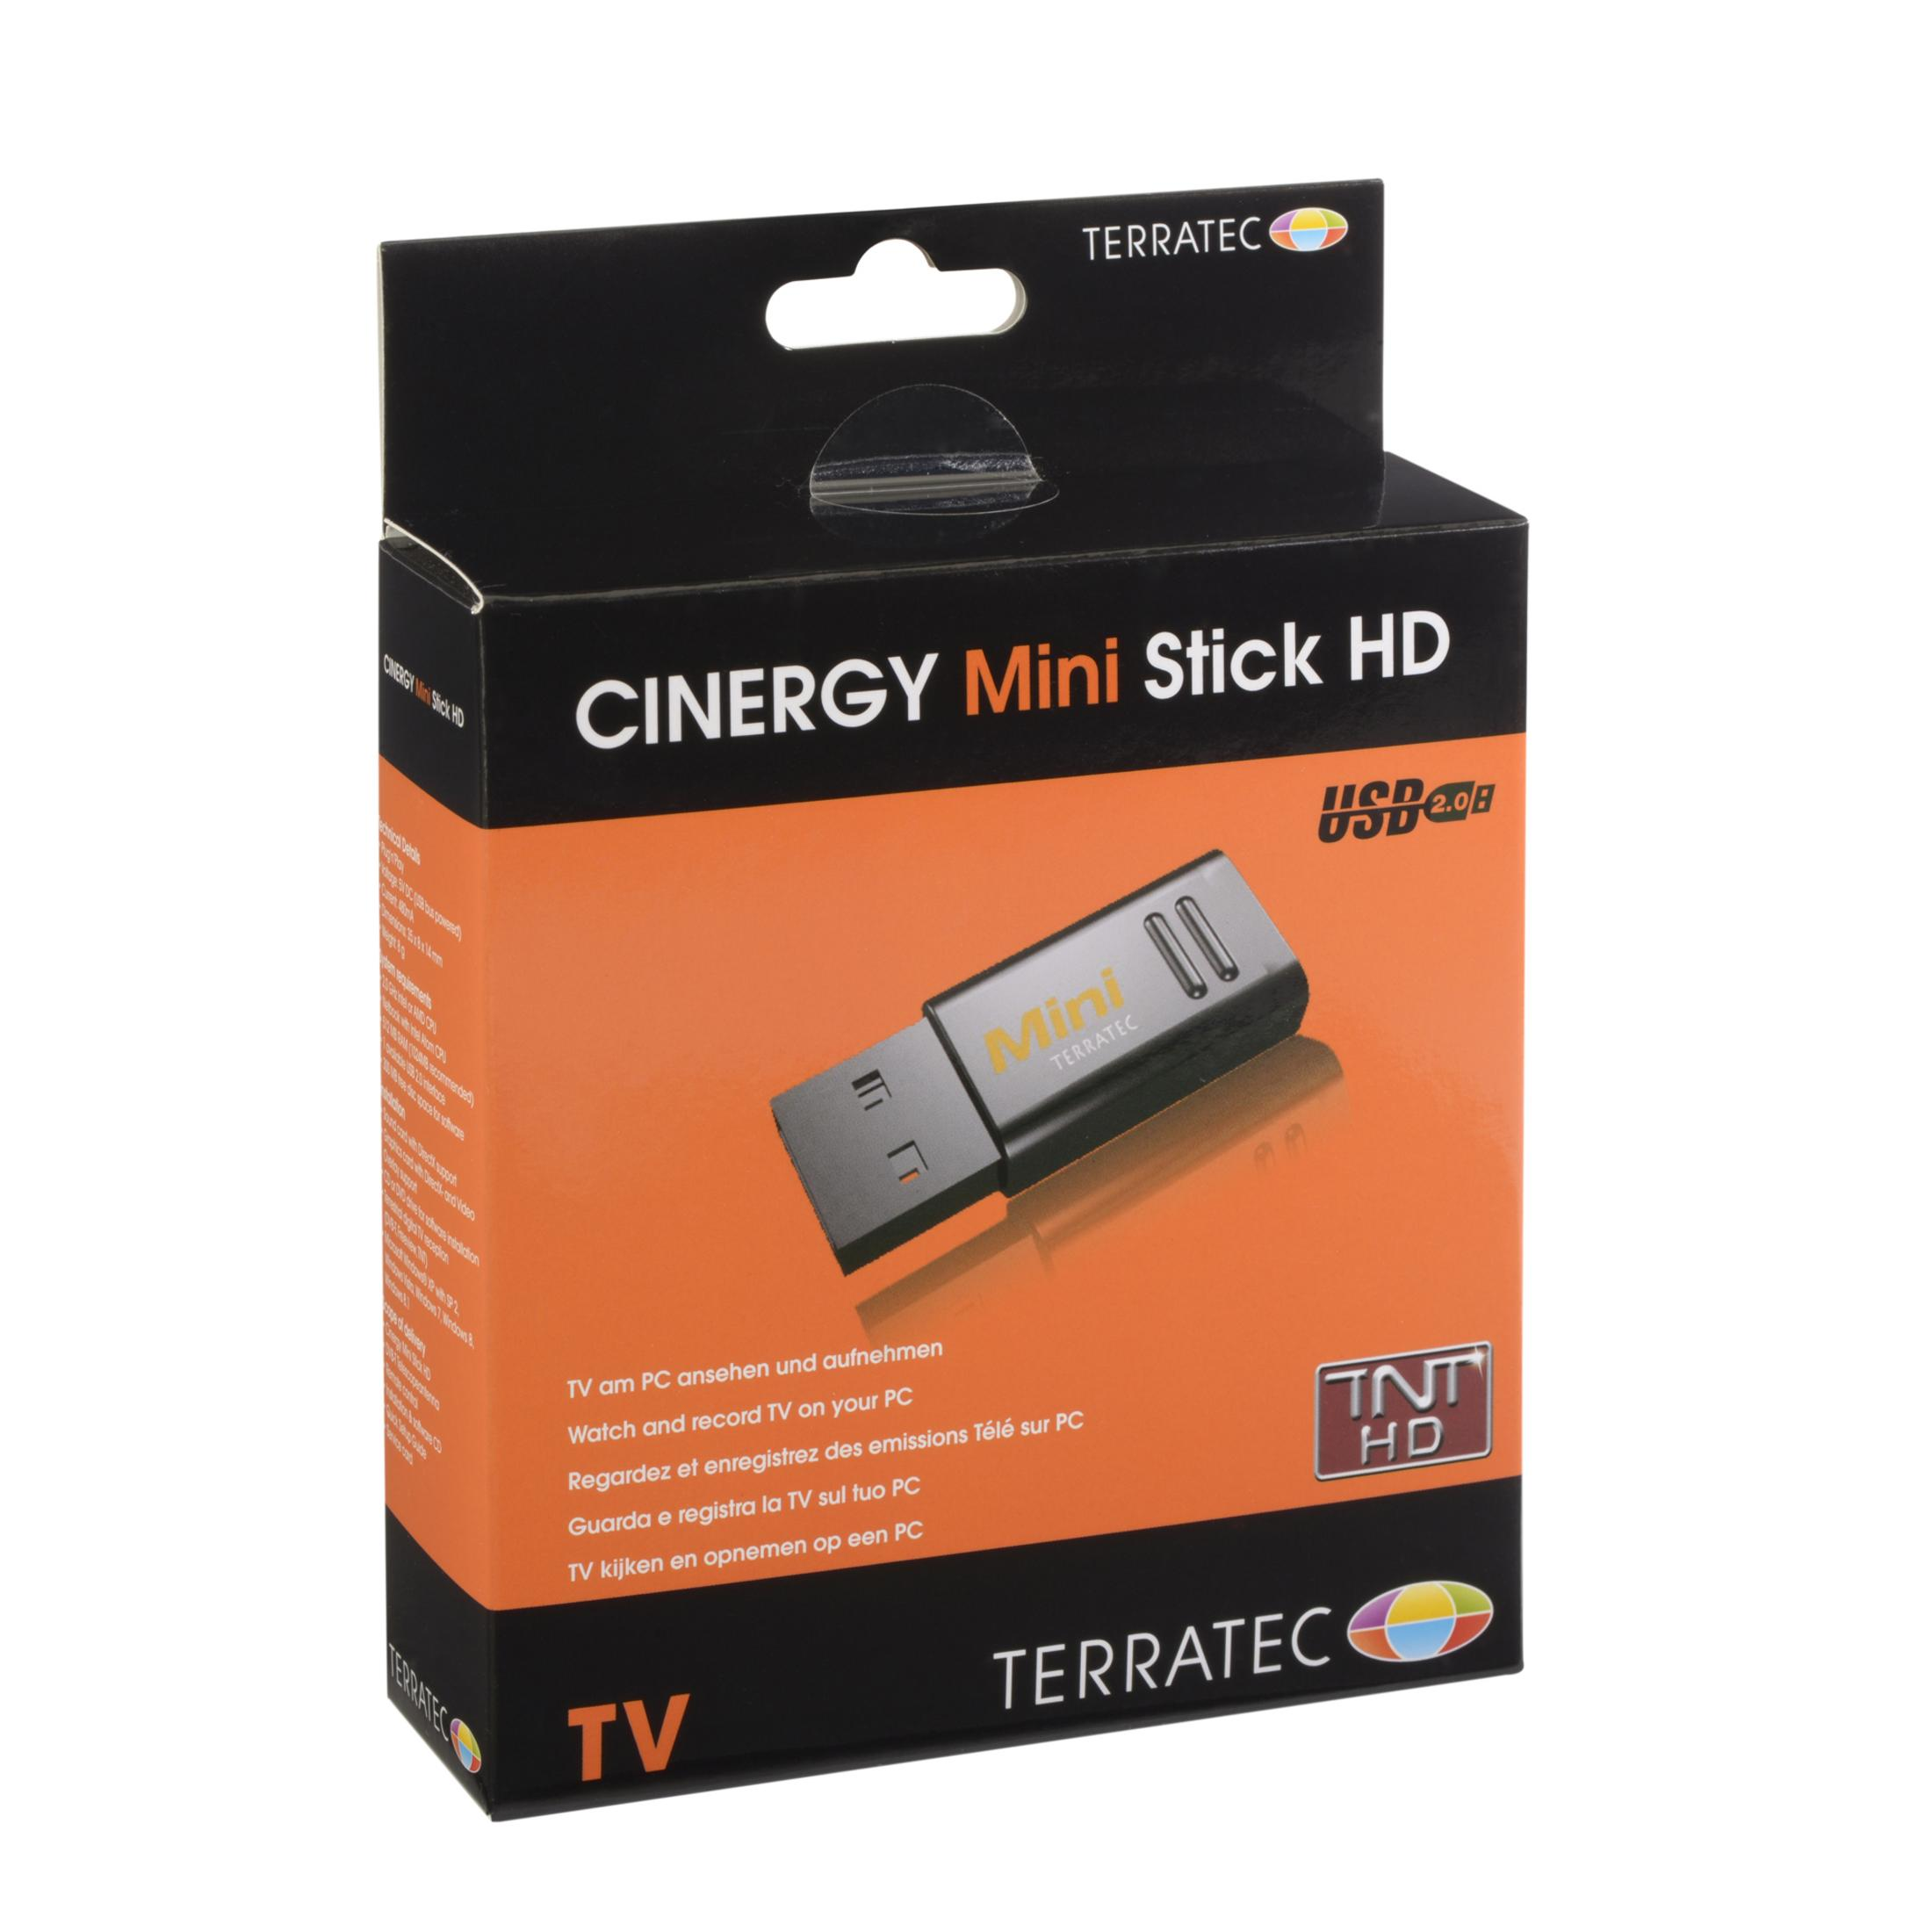 TV-Stick MINI STICK Mini 145259 CINERGY TERRATEC HD,